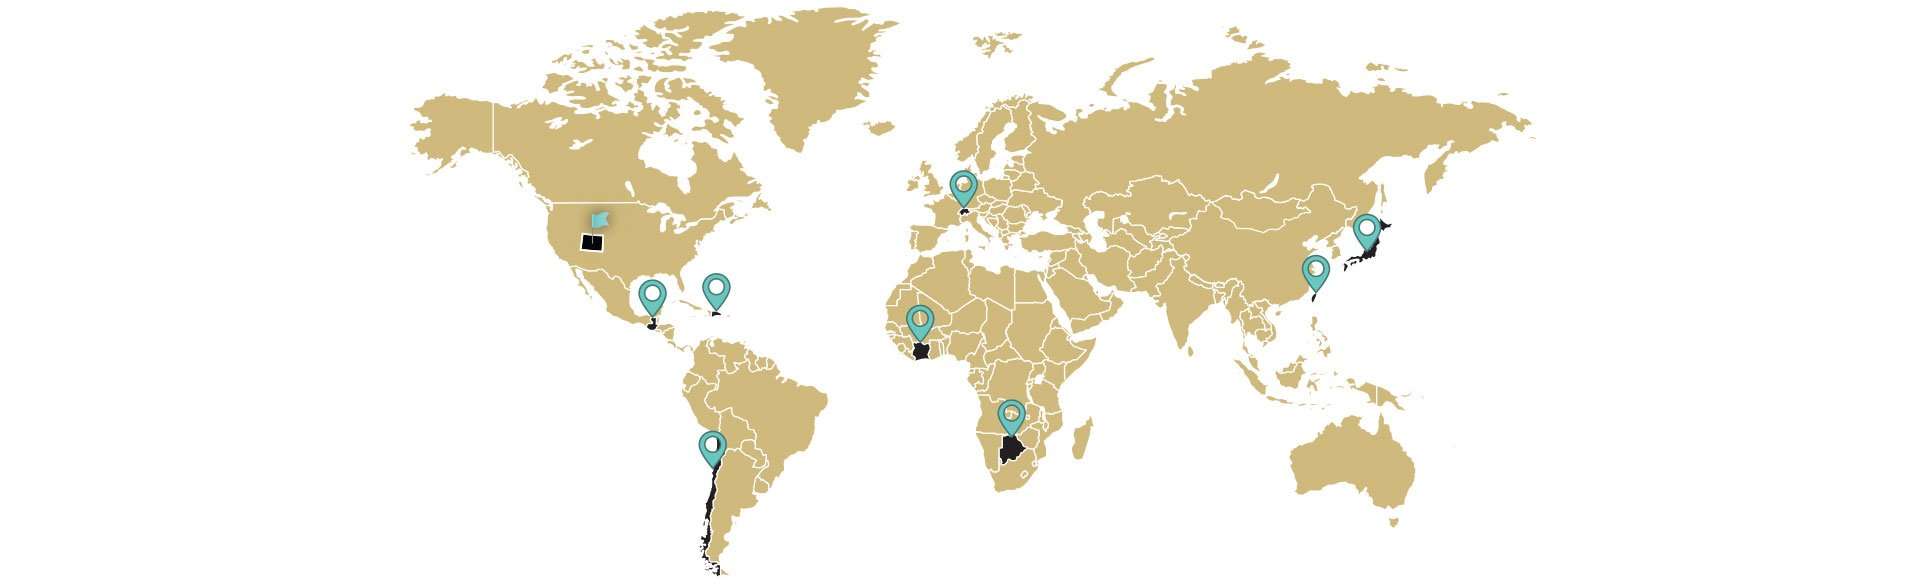 CU Nursing’s global impact map